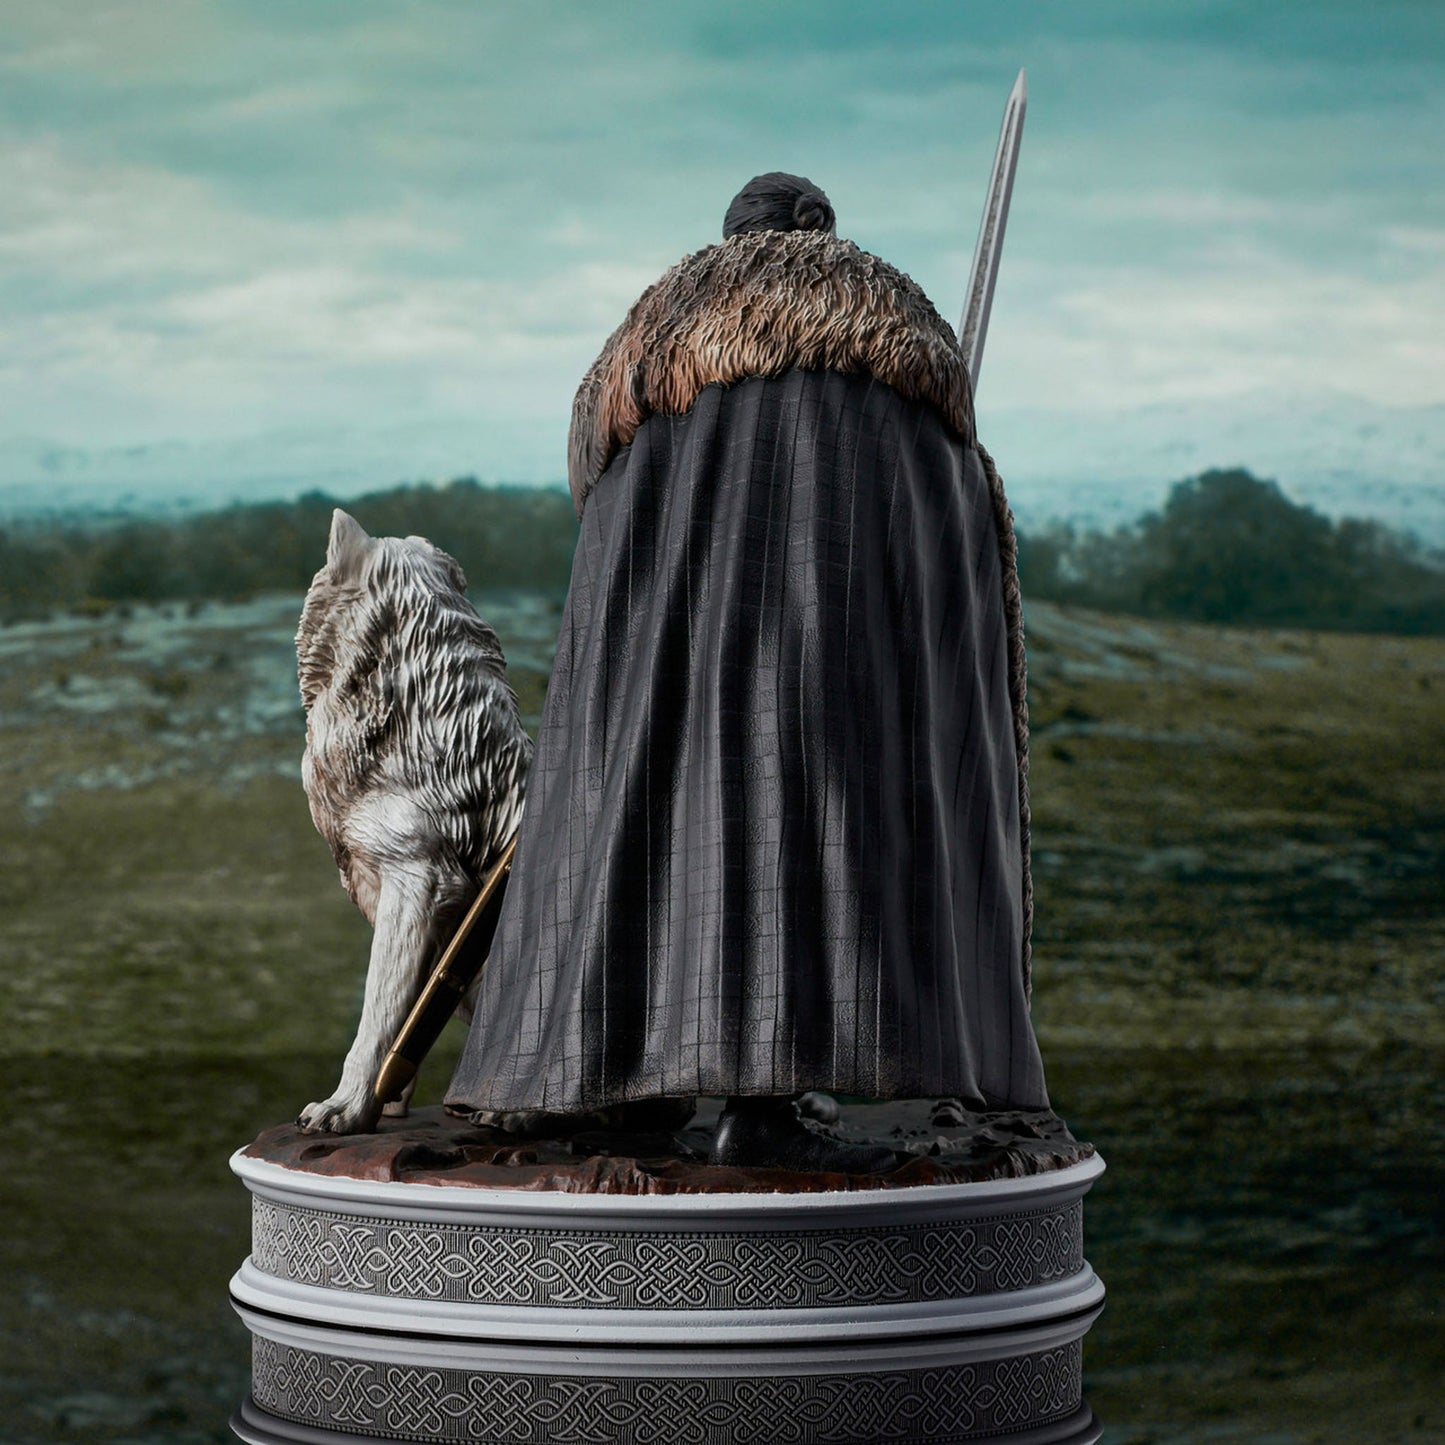 Jon Snow (Game of Thrones) Gallery Statue